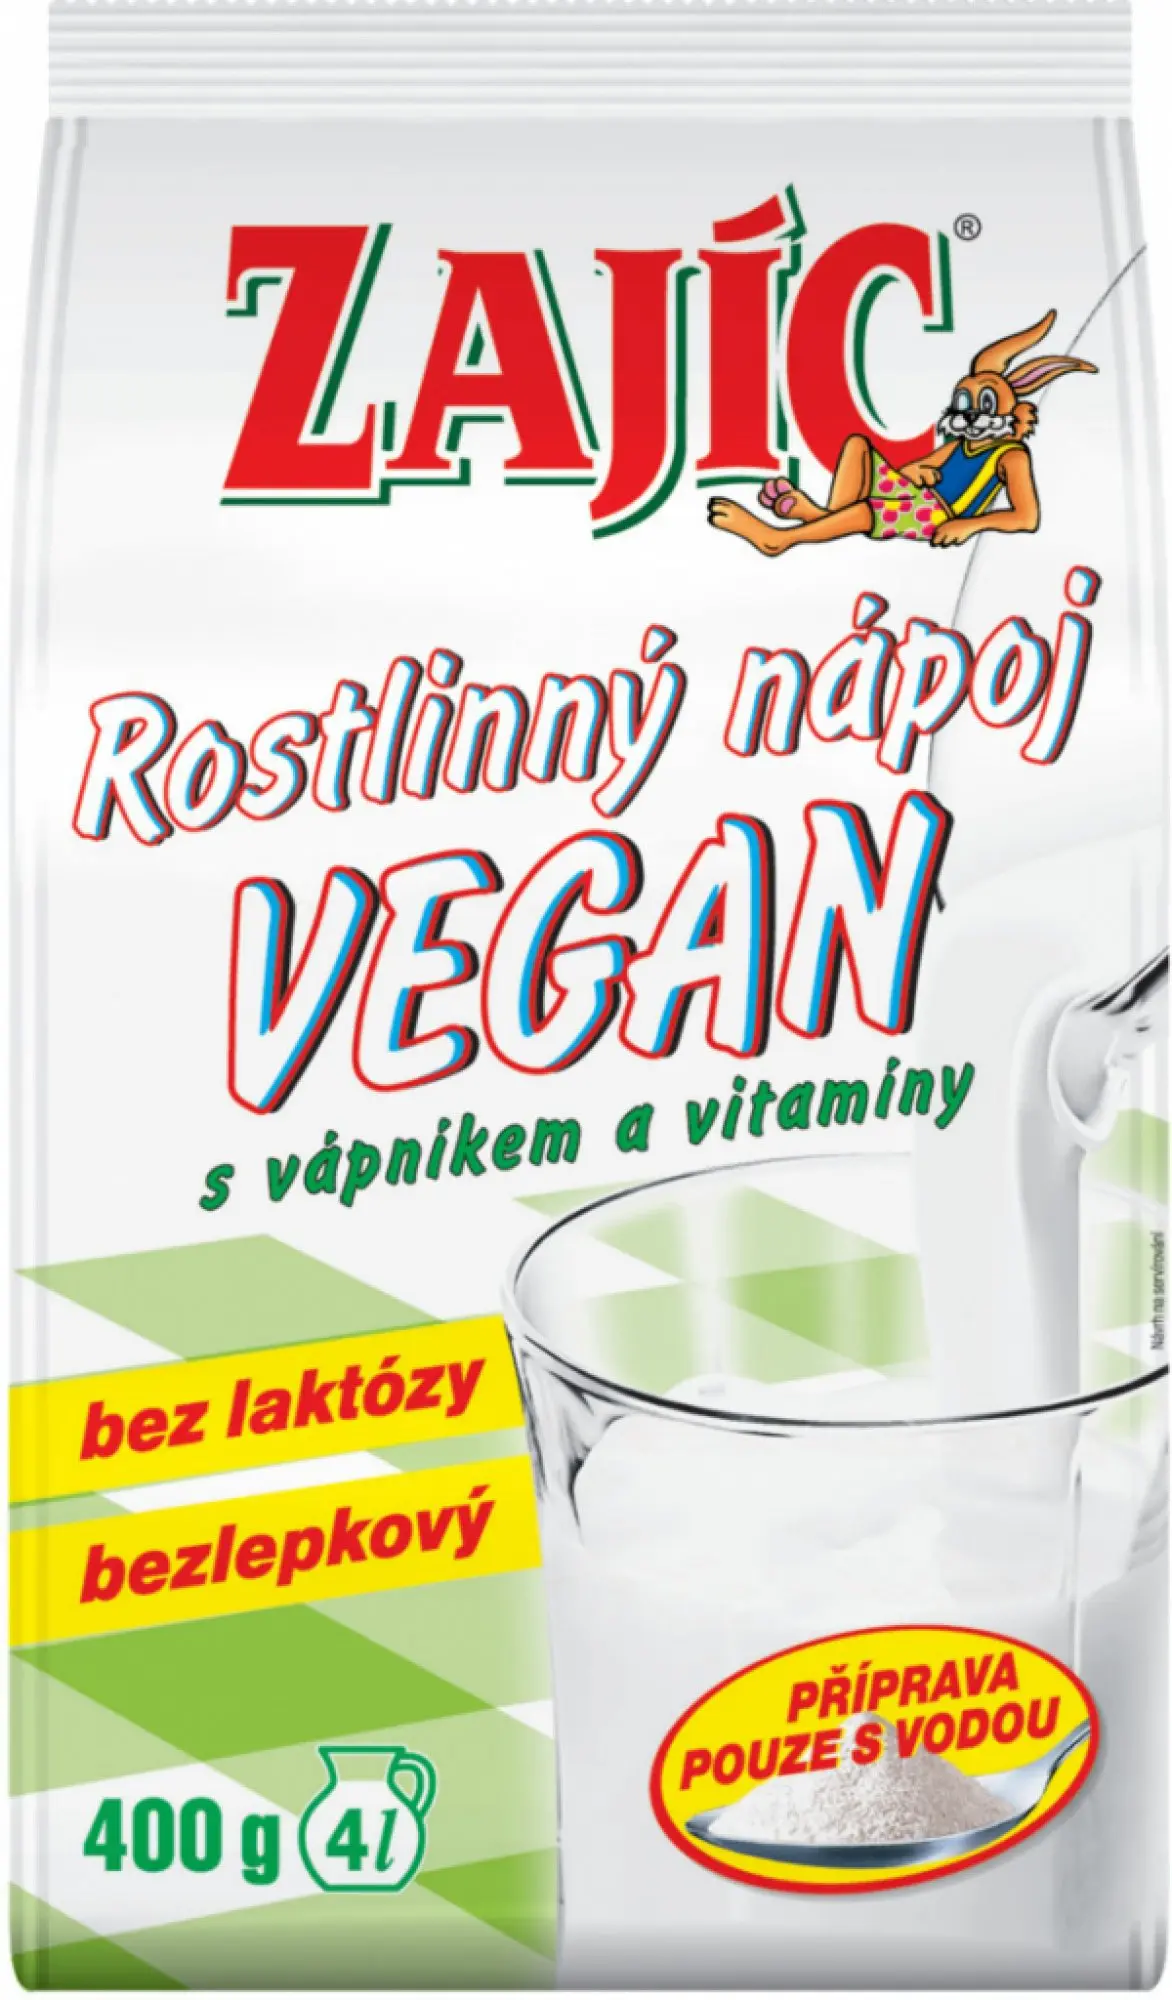 Natural Zajíc rostlinný nápoj Vegan s vápníkem a vitamíny 400g